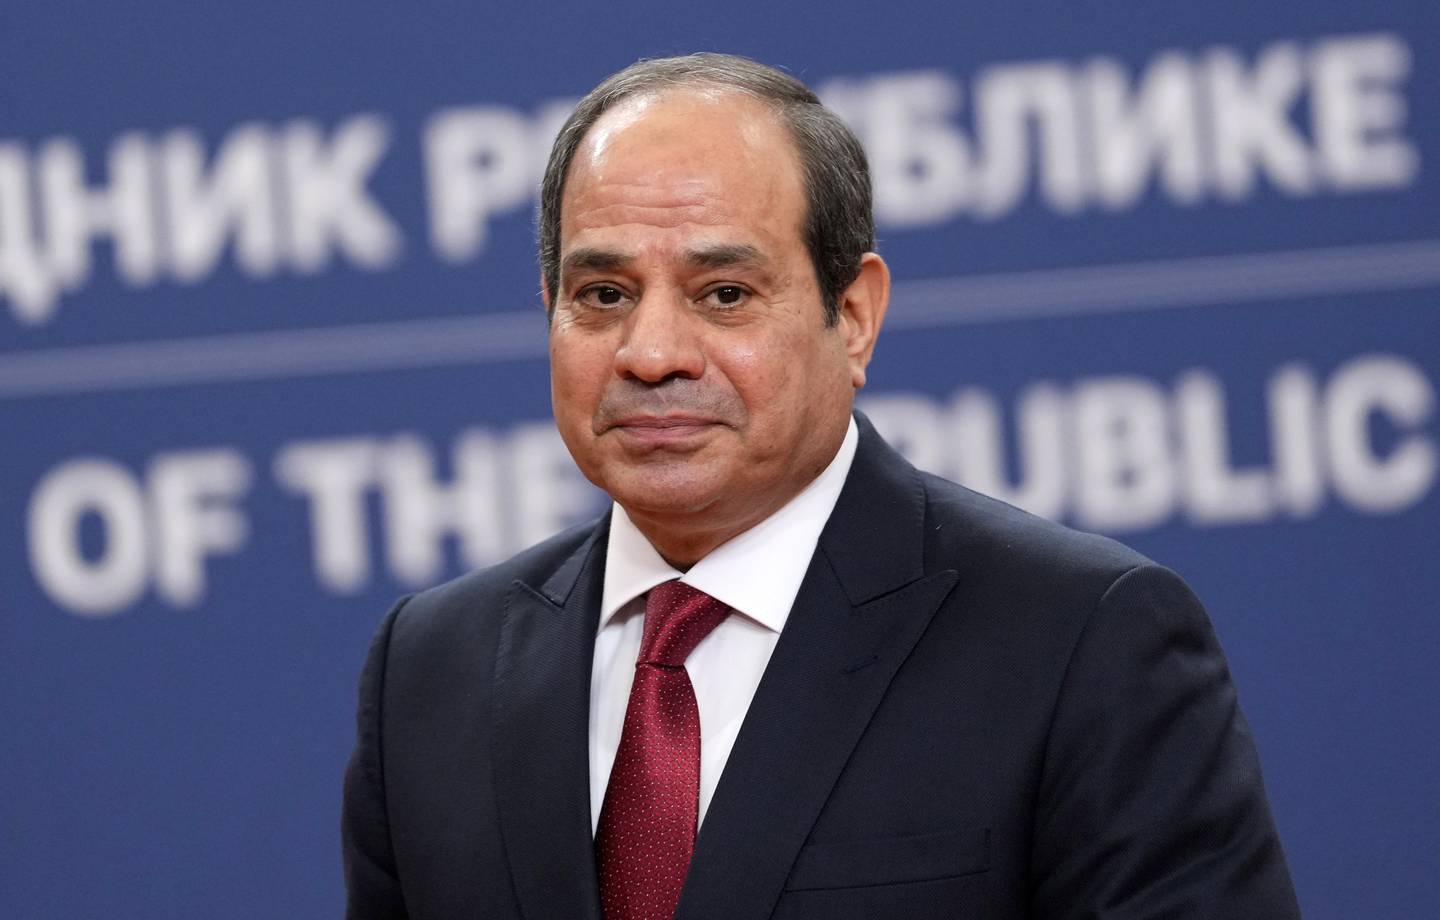 Egyptian President Abdel Fattah El Sisi has oversen economic reforms inc;luding the lifting of state subsidies. AP 